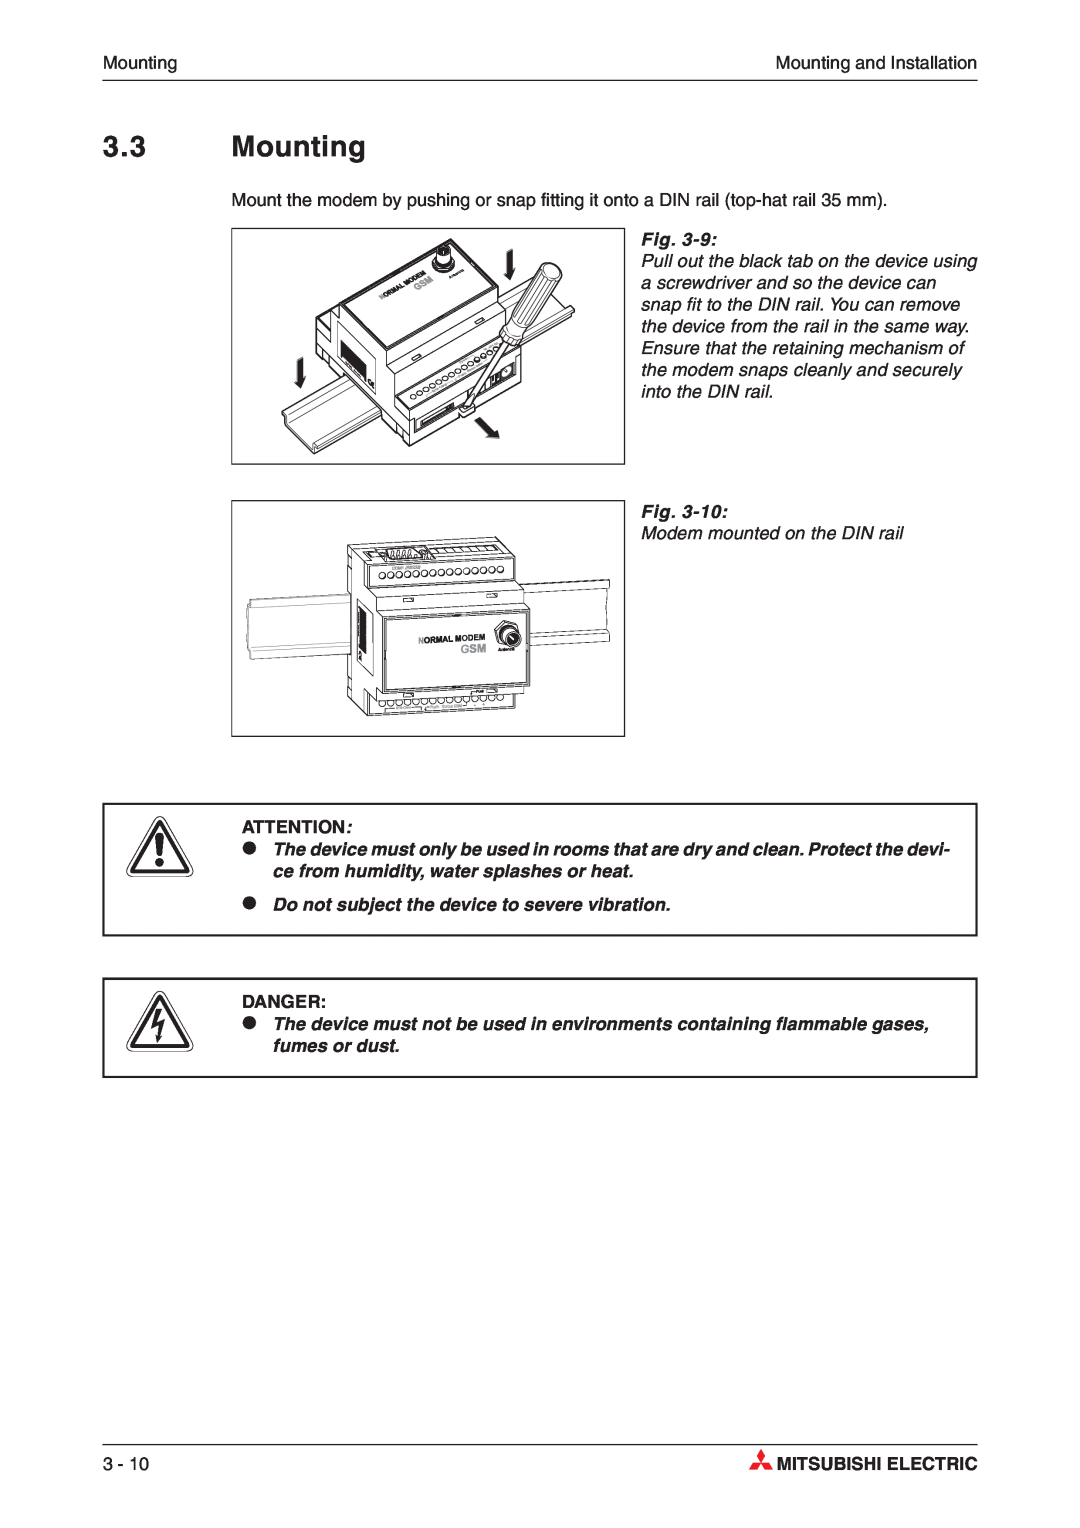 Mitsubishi Electronics MIM-A01, MIM-G01 manual Mounting, E Attention, P Danger, Mitsubishi Electric 